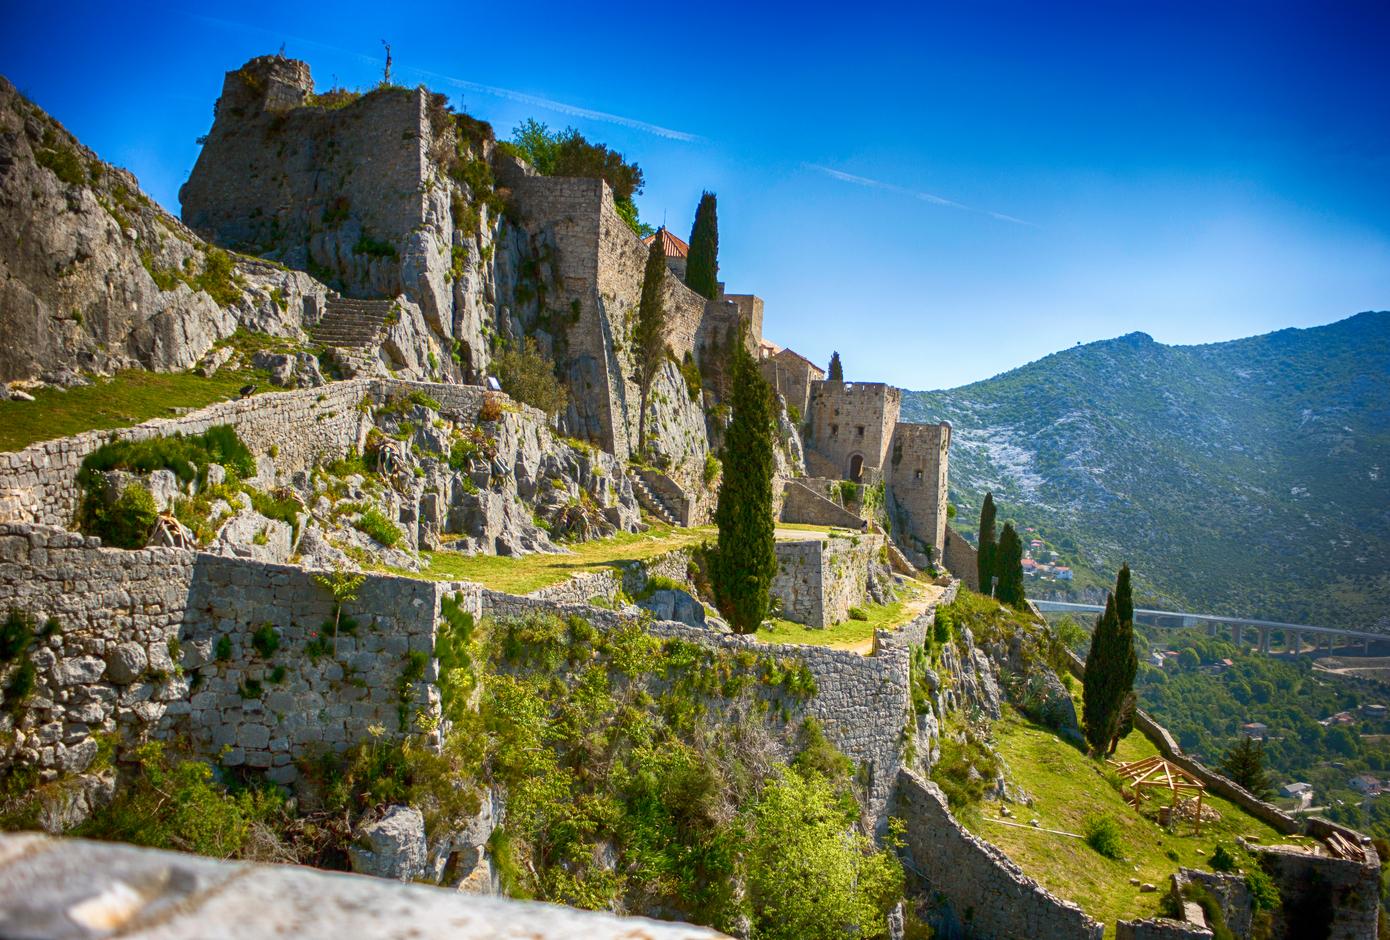 The Klis Fortress, located near Split, in Croatia.